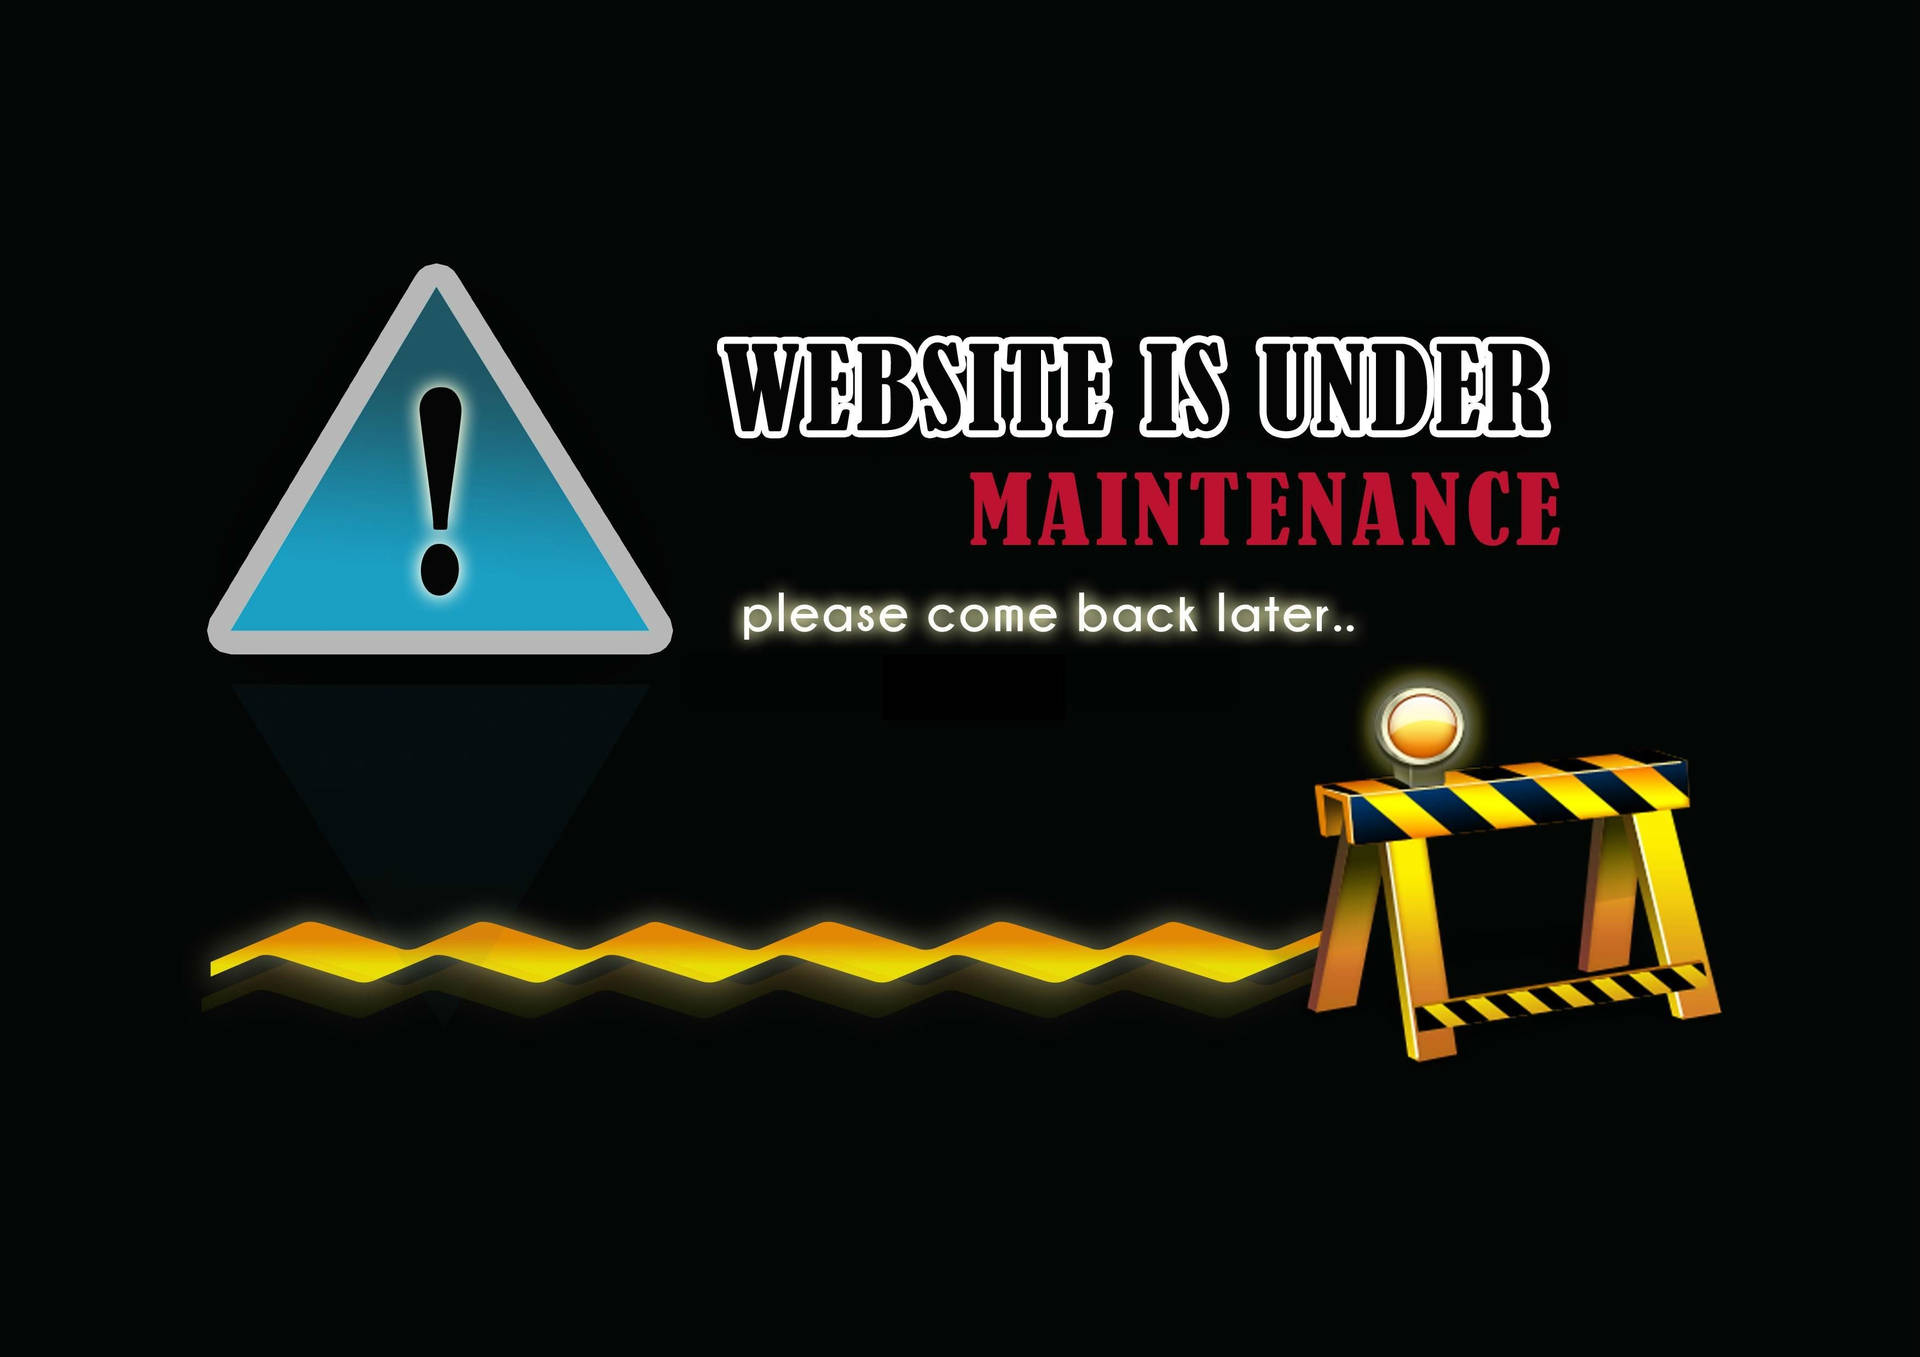 website-under-maintenance-warning-sign-bjrs6jxtxhvj3ynu